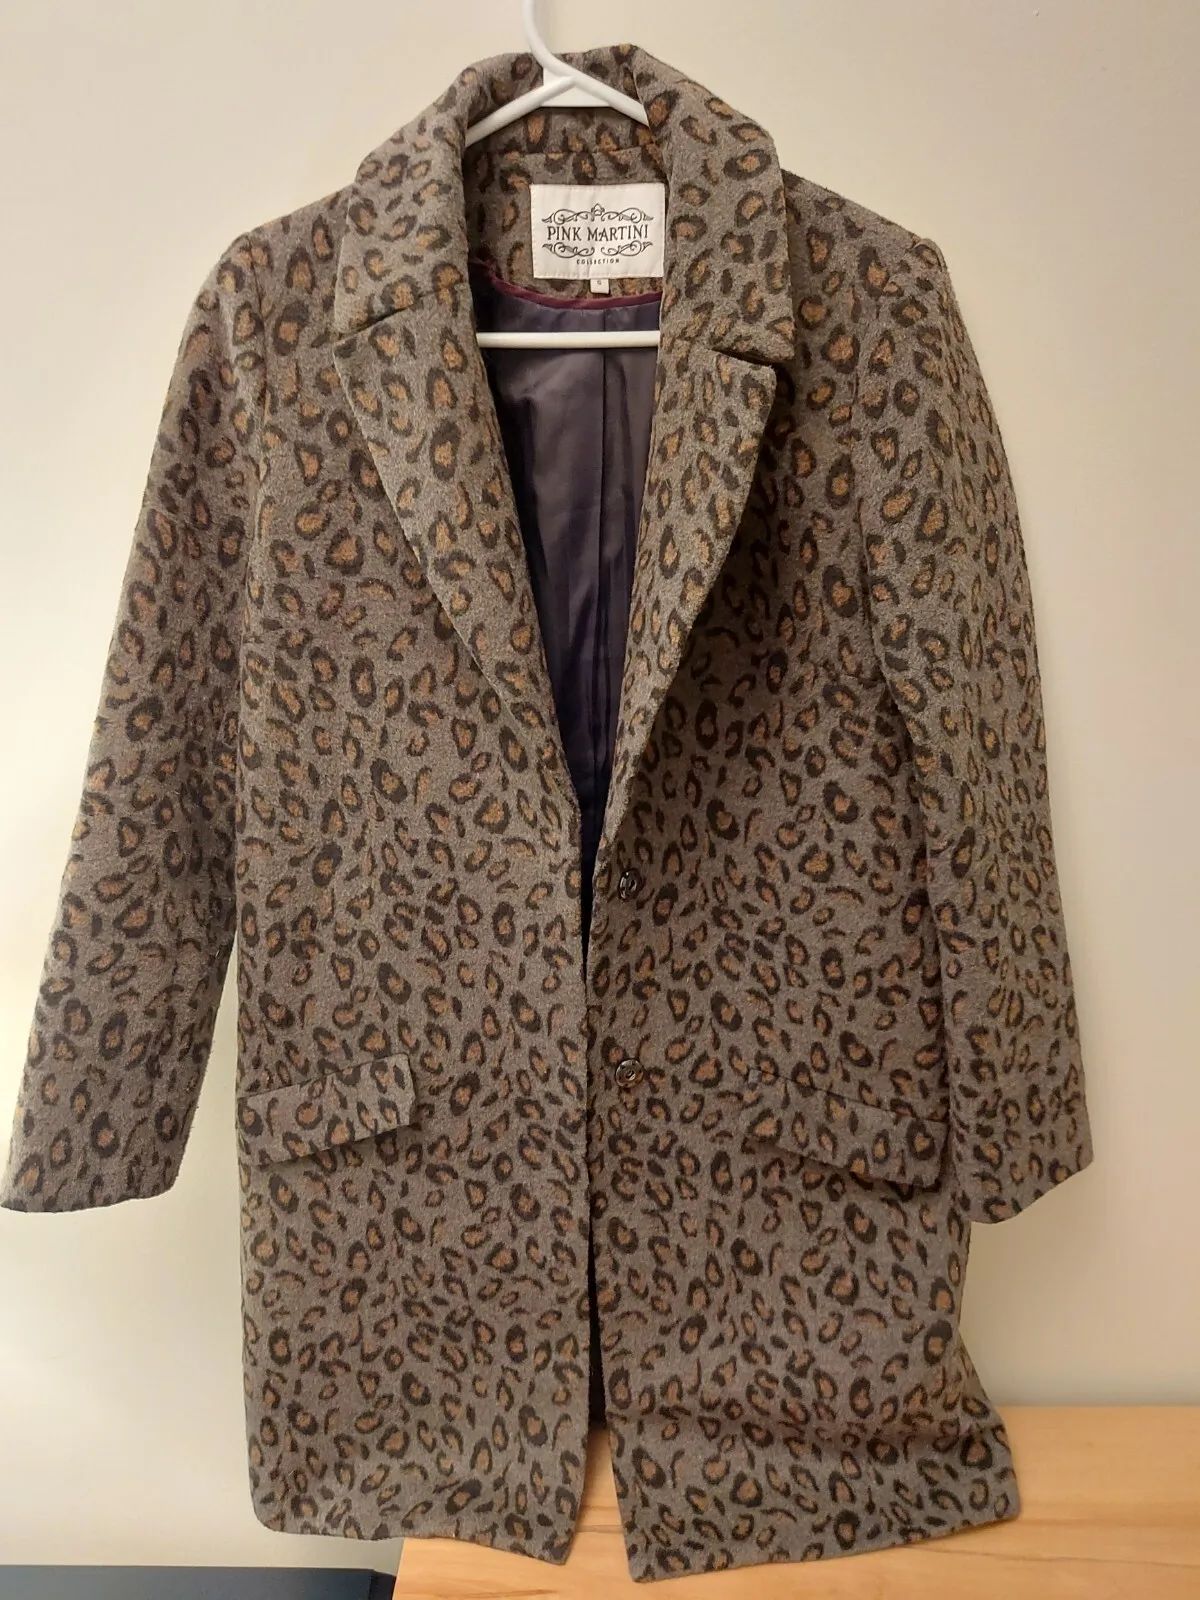 Pink Martini Women's Leopard Print Winter Trench Coat - Stylish & Warm | eBay CA